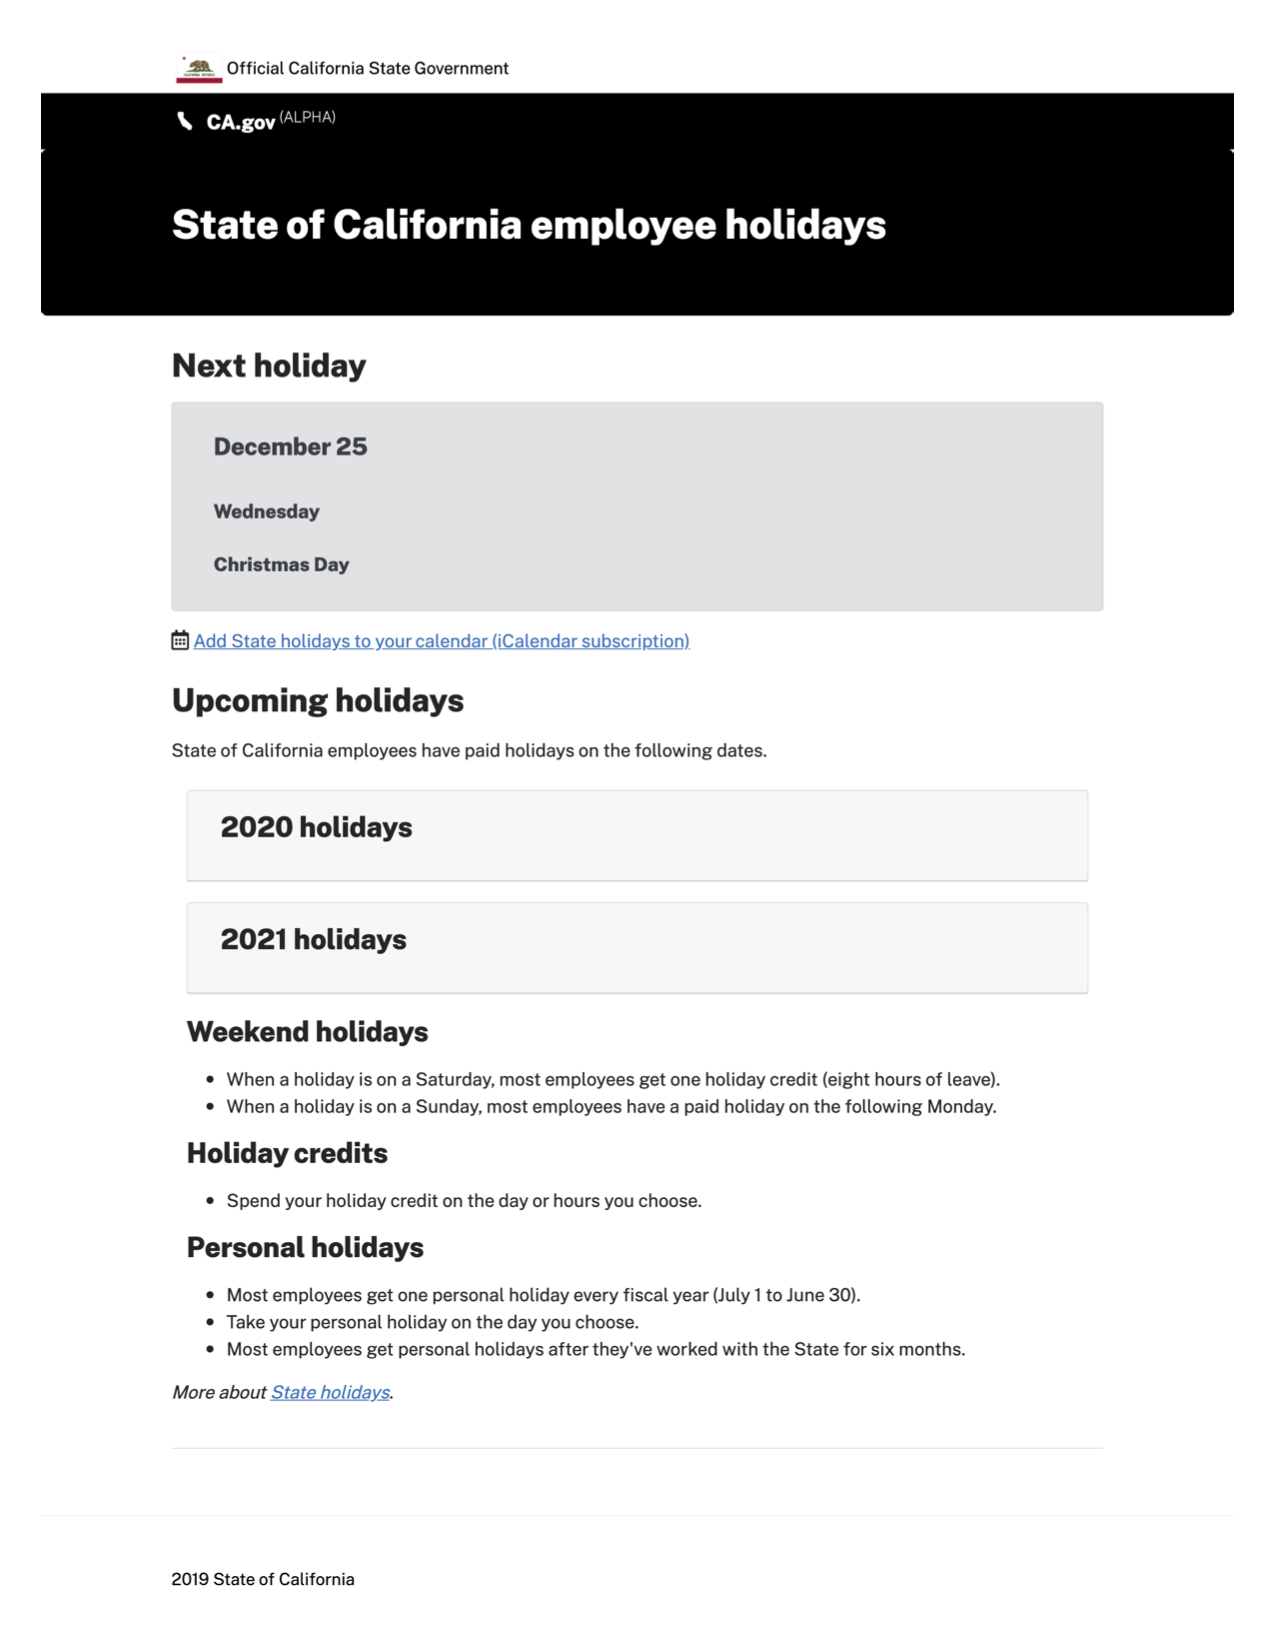 Screenshot of the current CA.gov “Screenshot of Alpha.CA.gov design prototype for “Find official California state holidays.”